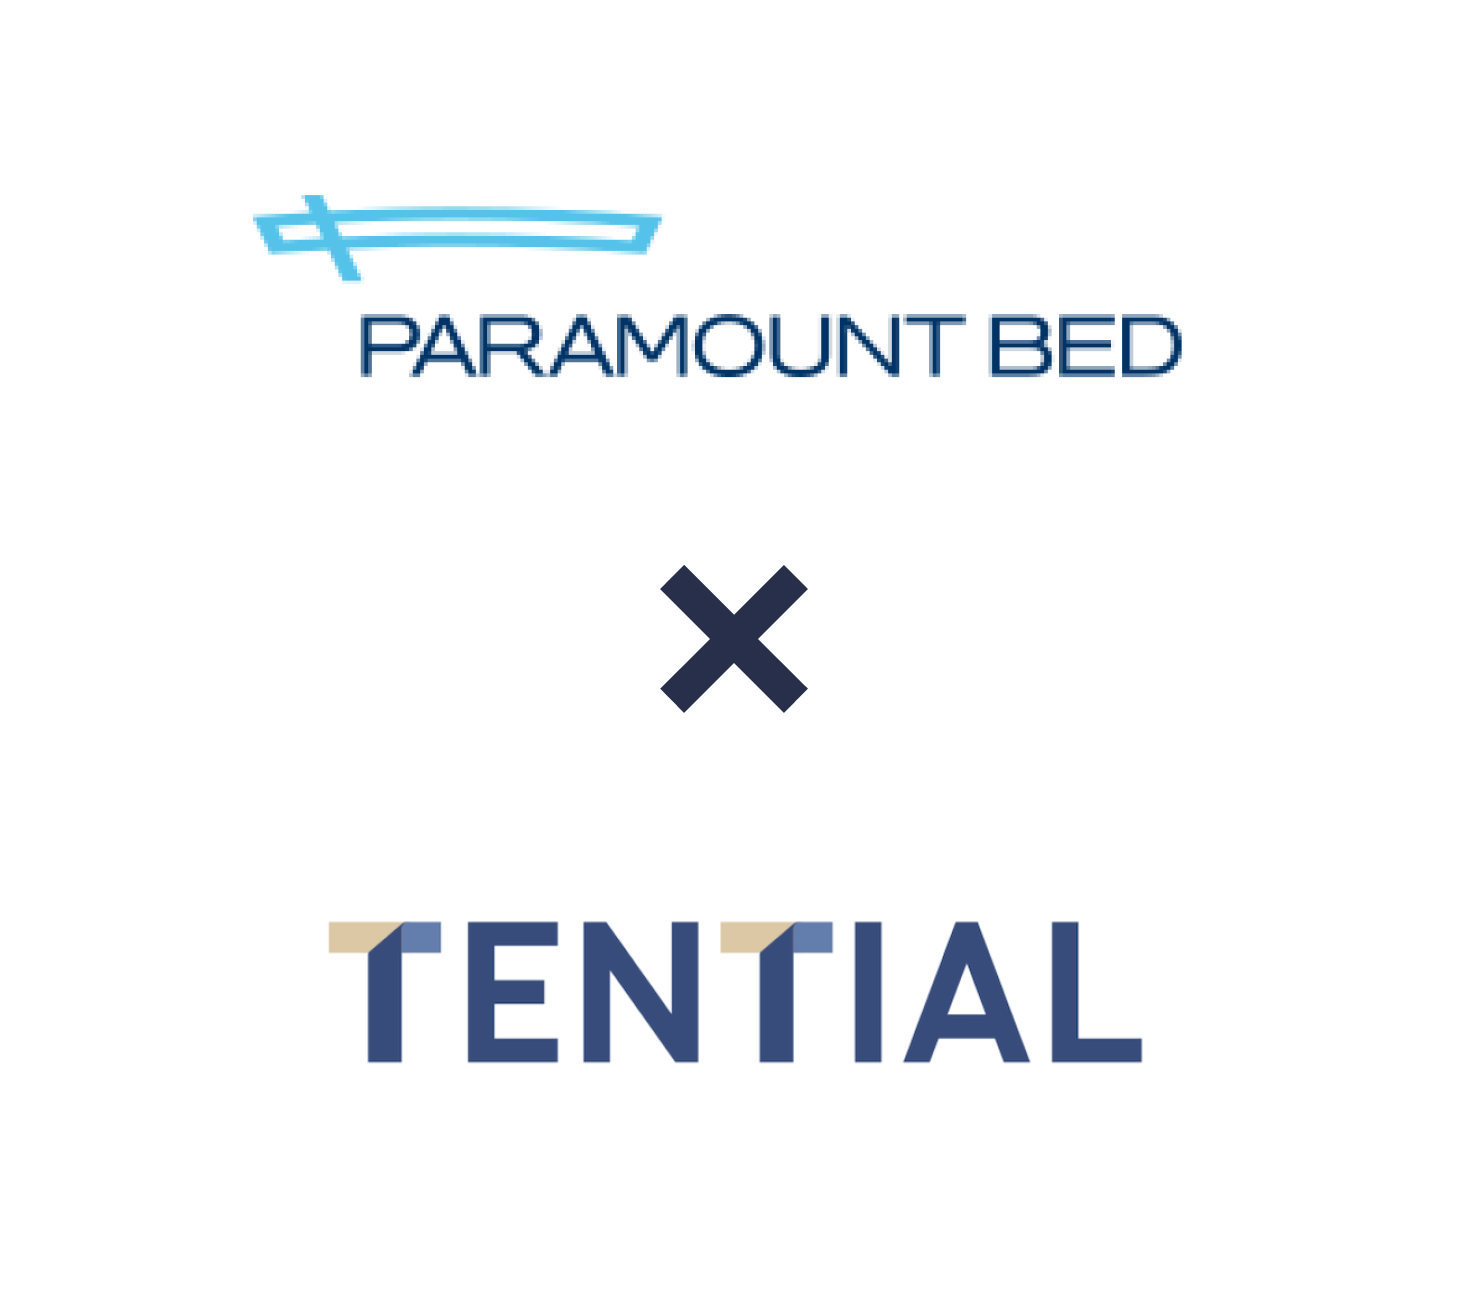 TENTIAL×パラマウントベッド<br>リカバリーウェアが夏場の冷え性×睡眠に与える影響